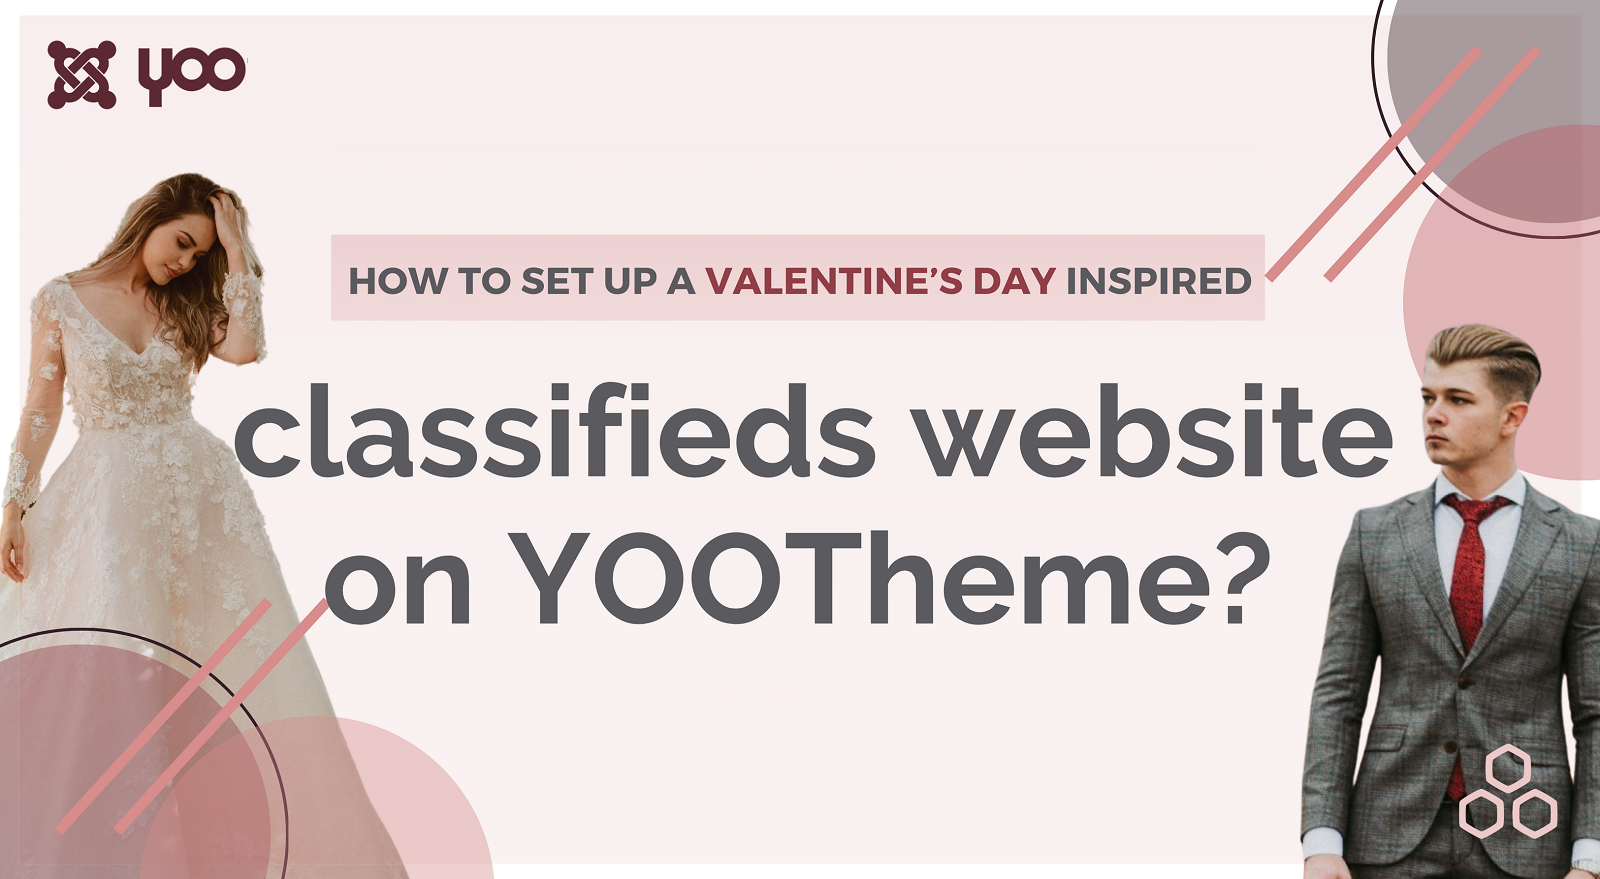 valentines day inspired website ob yootheme2